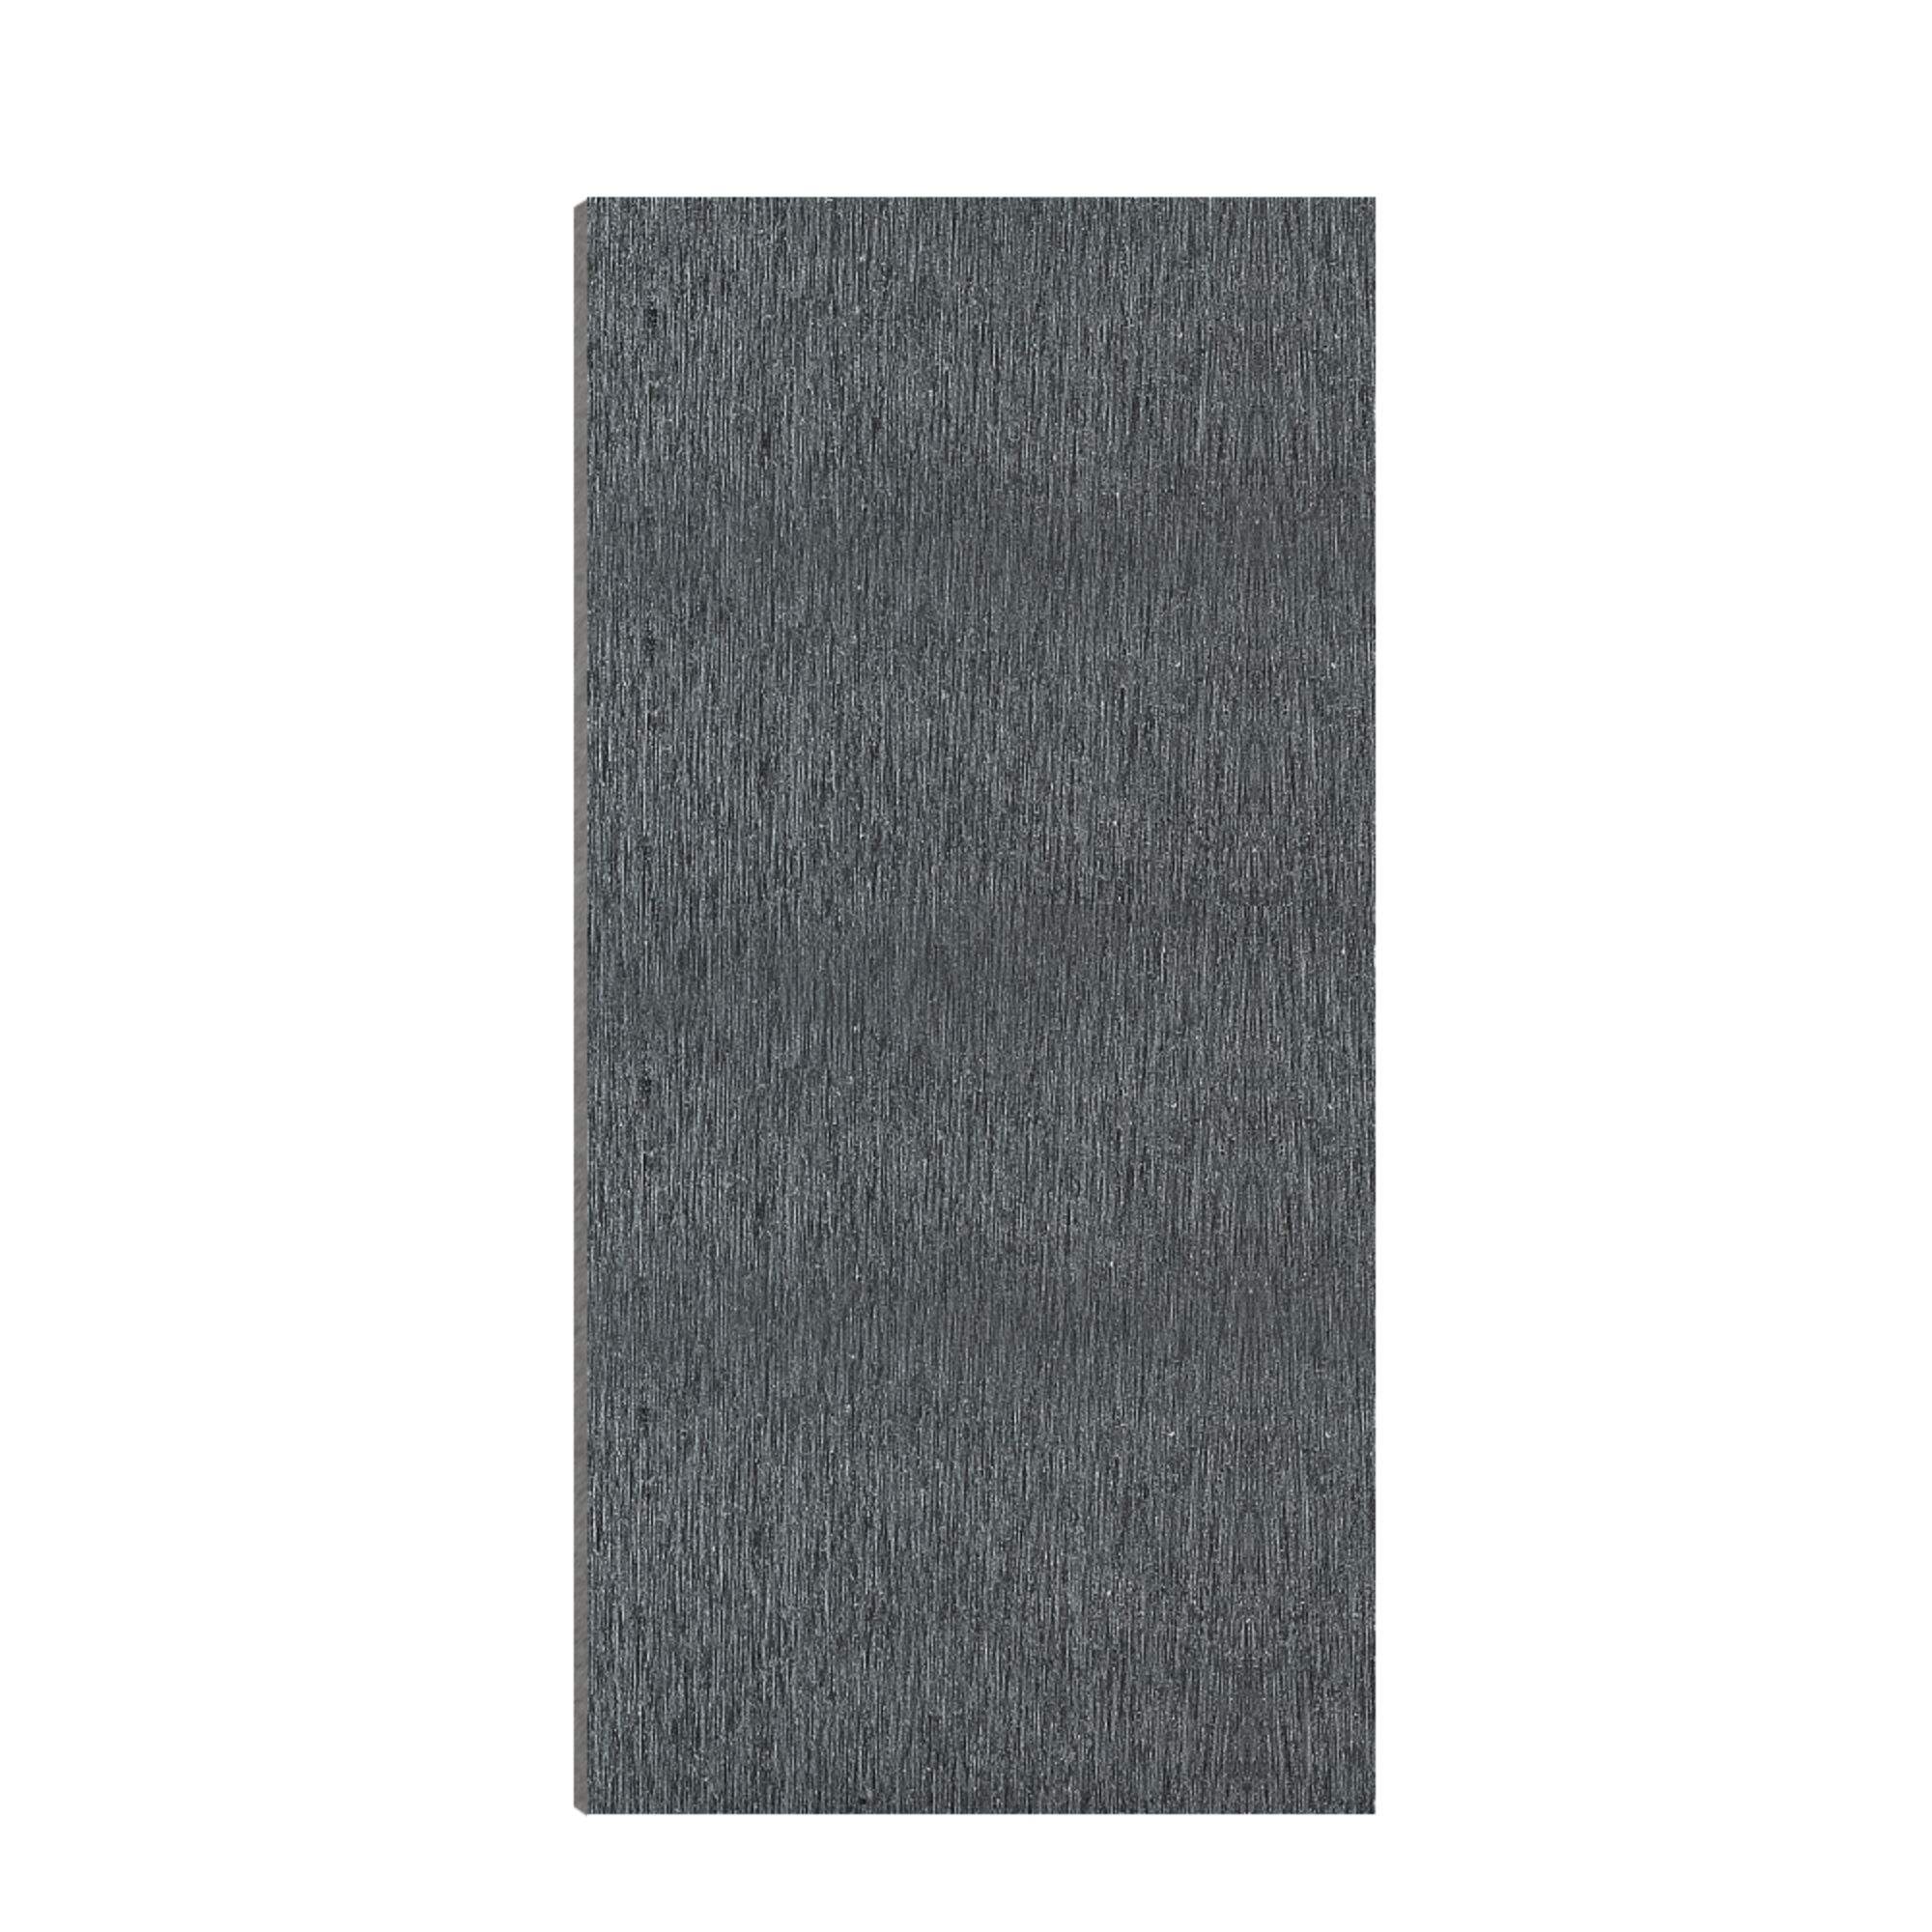 Fiber Cement Board Brushed Dark Grey